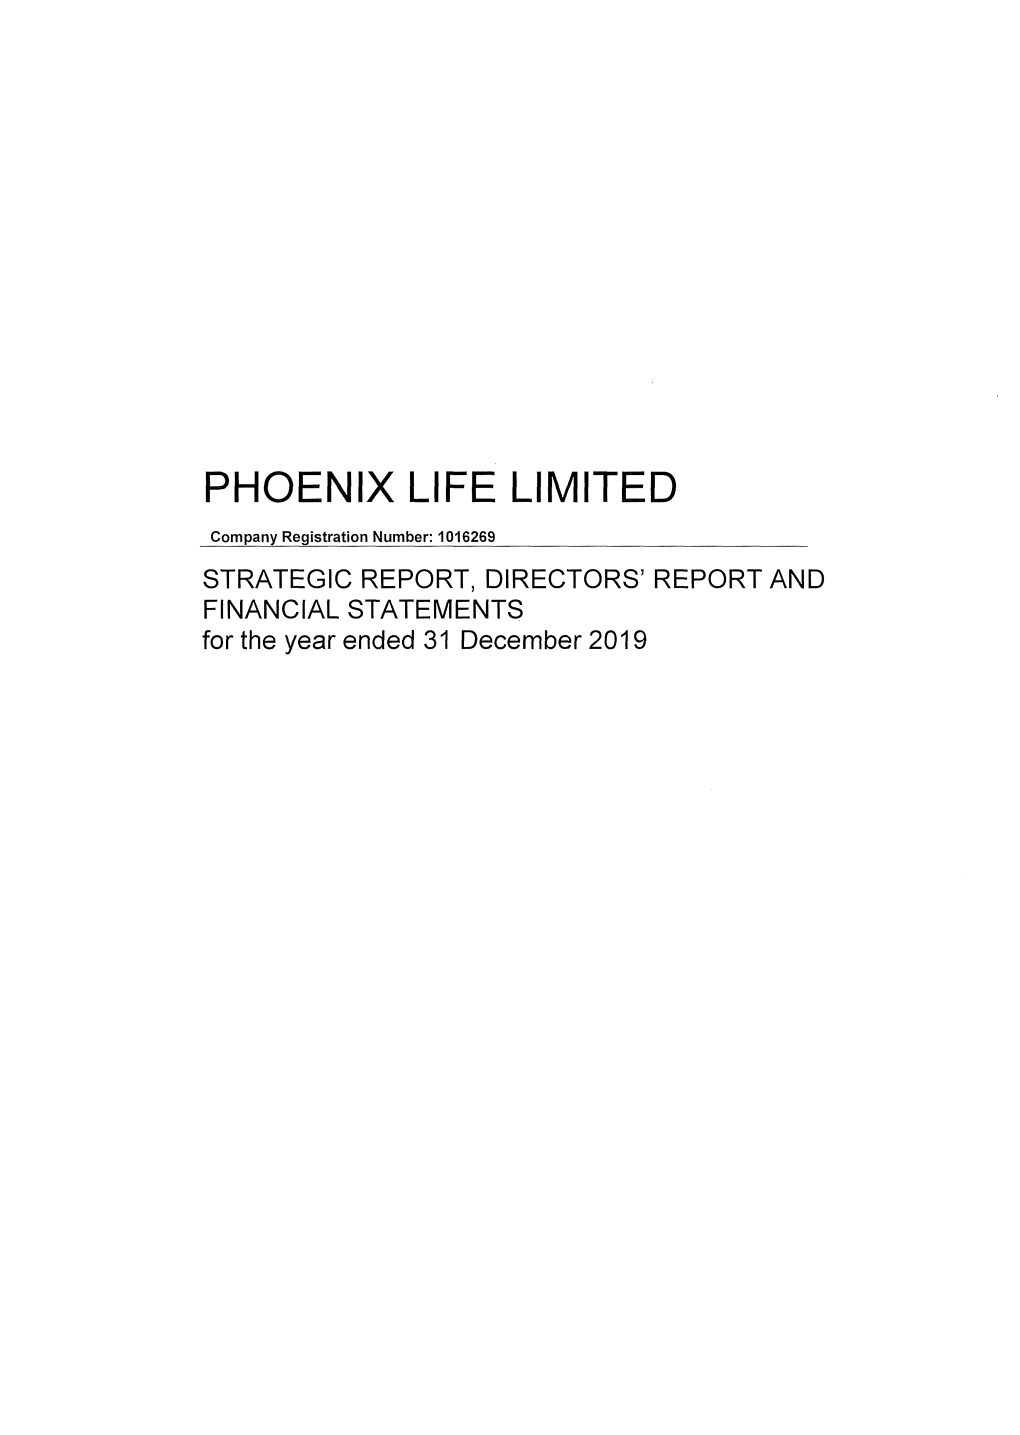 Phoenix Life Limited